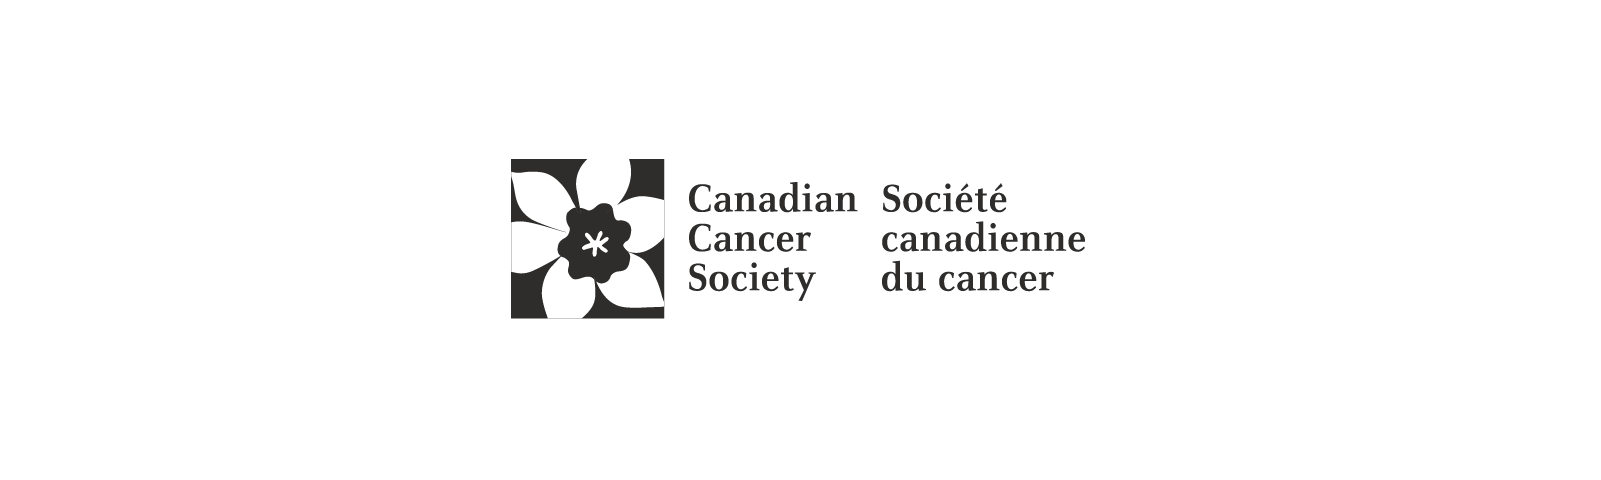 Canadian-Cancer-Society